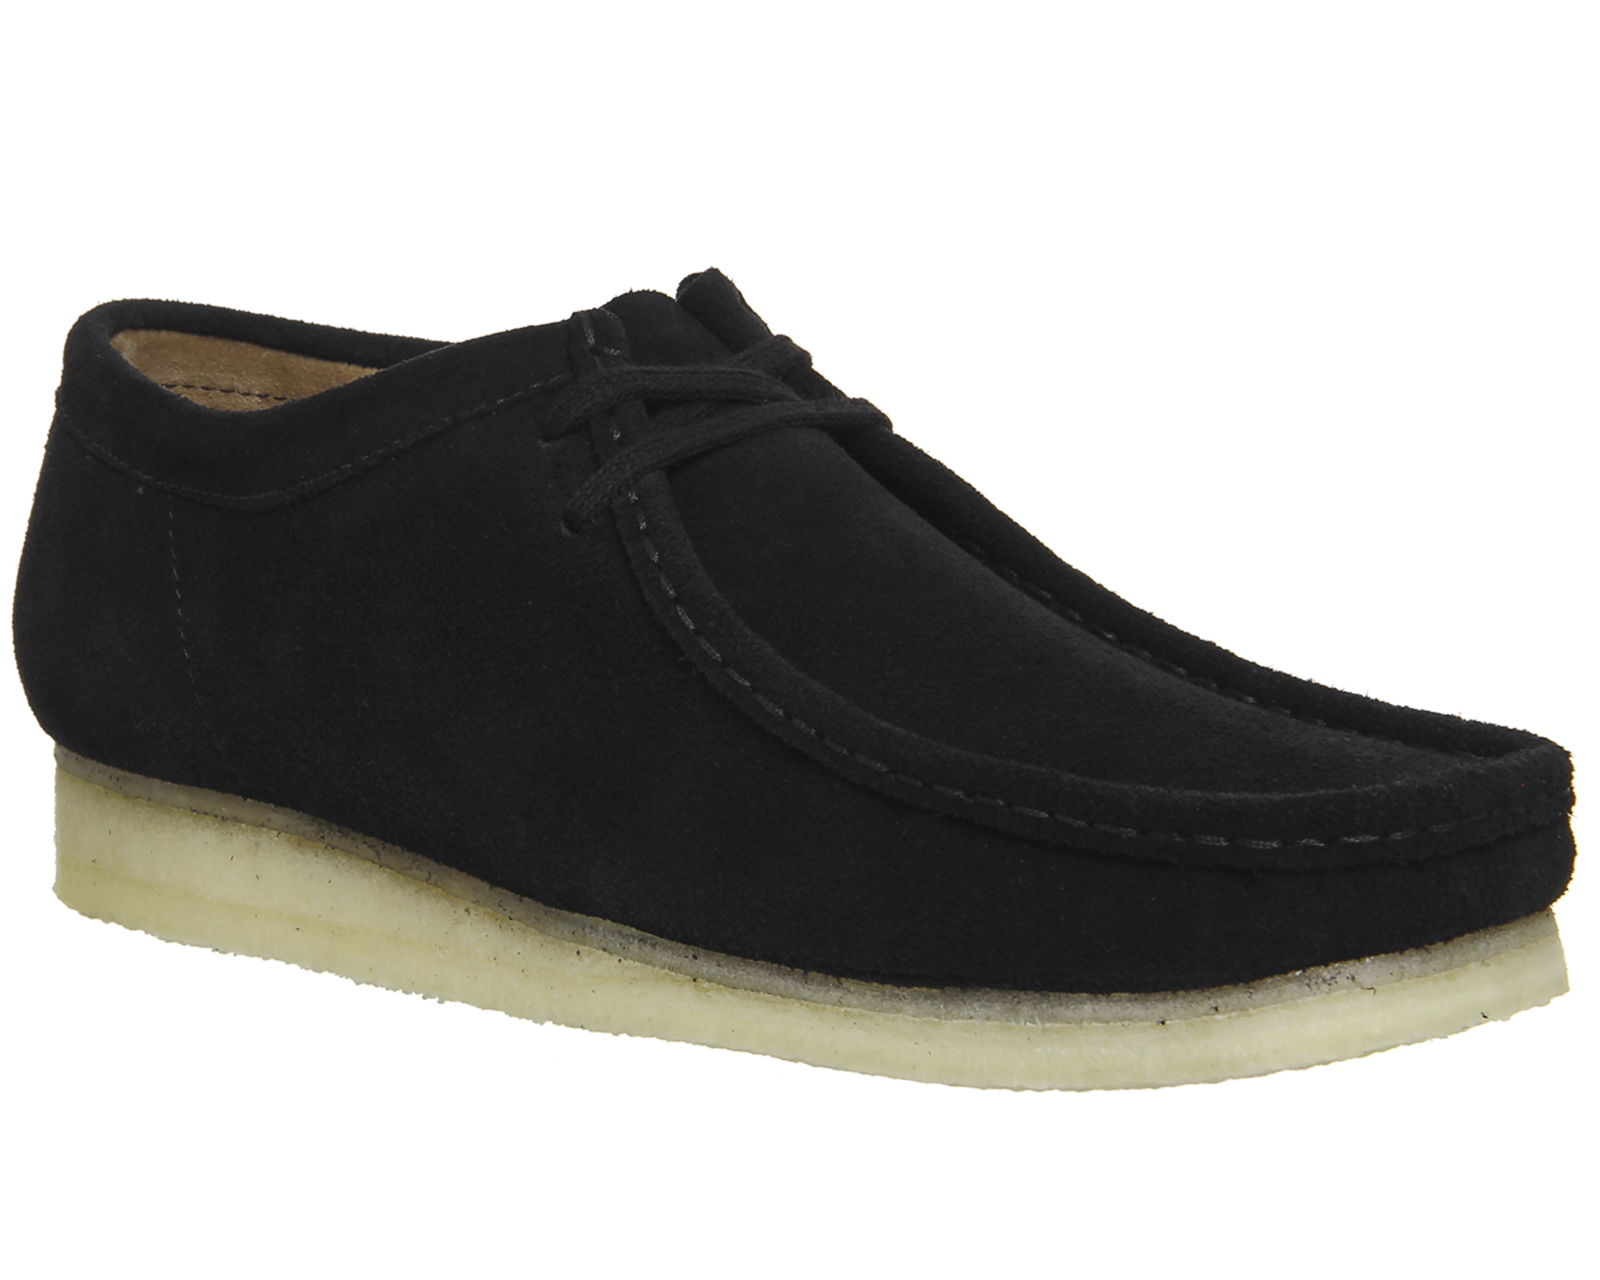 clarks shoes black friday sale 2015